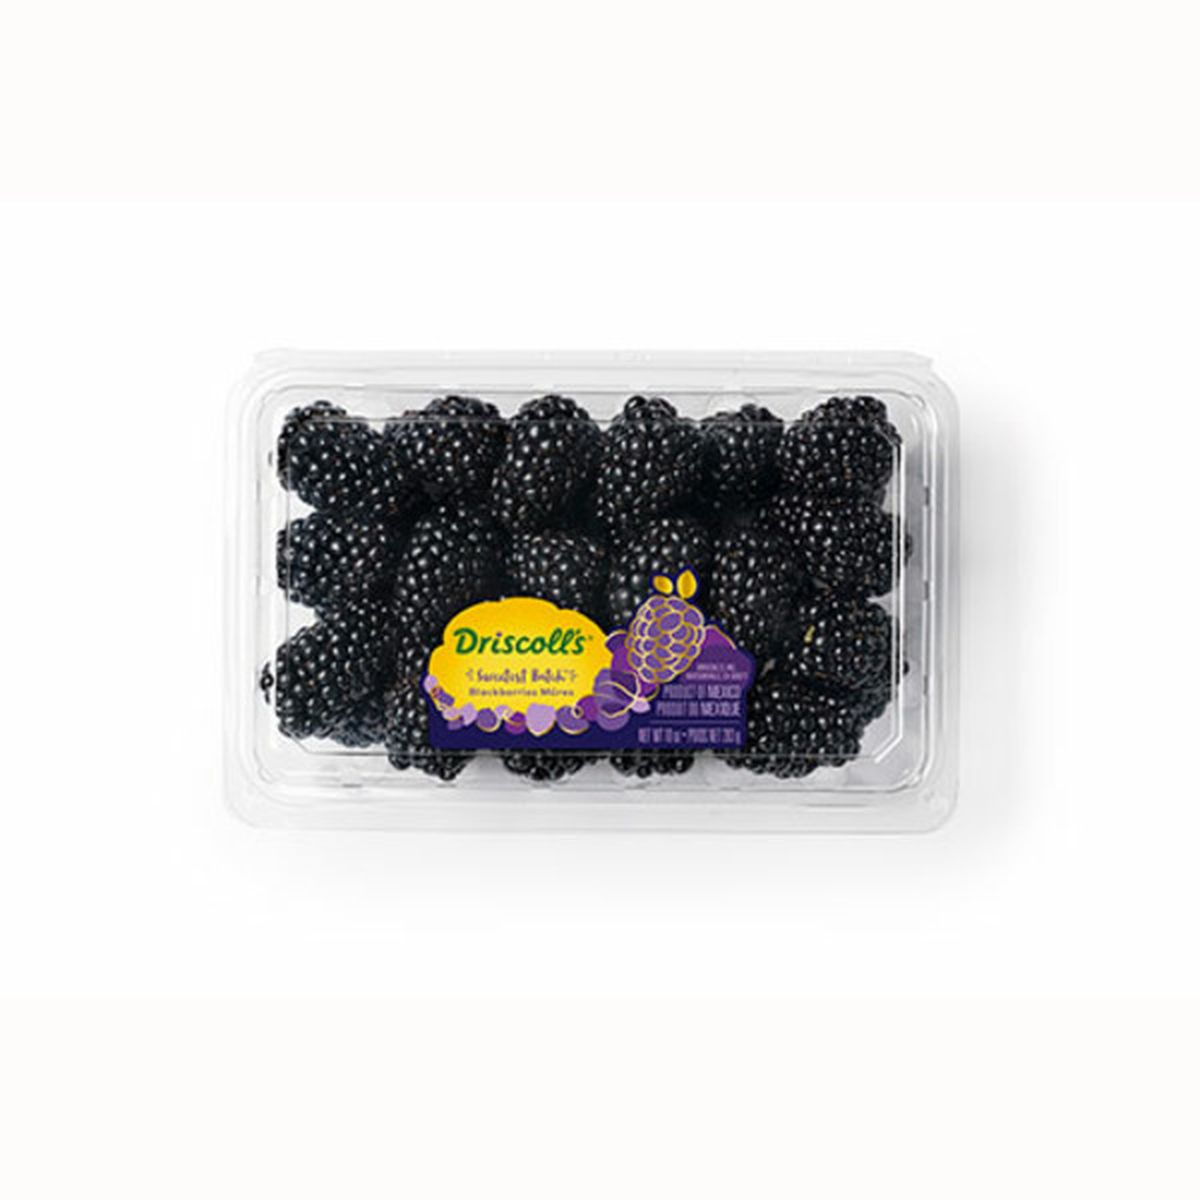 Calories in Driscoll's Sweetest Batch Blackberries